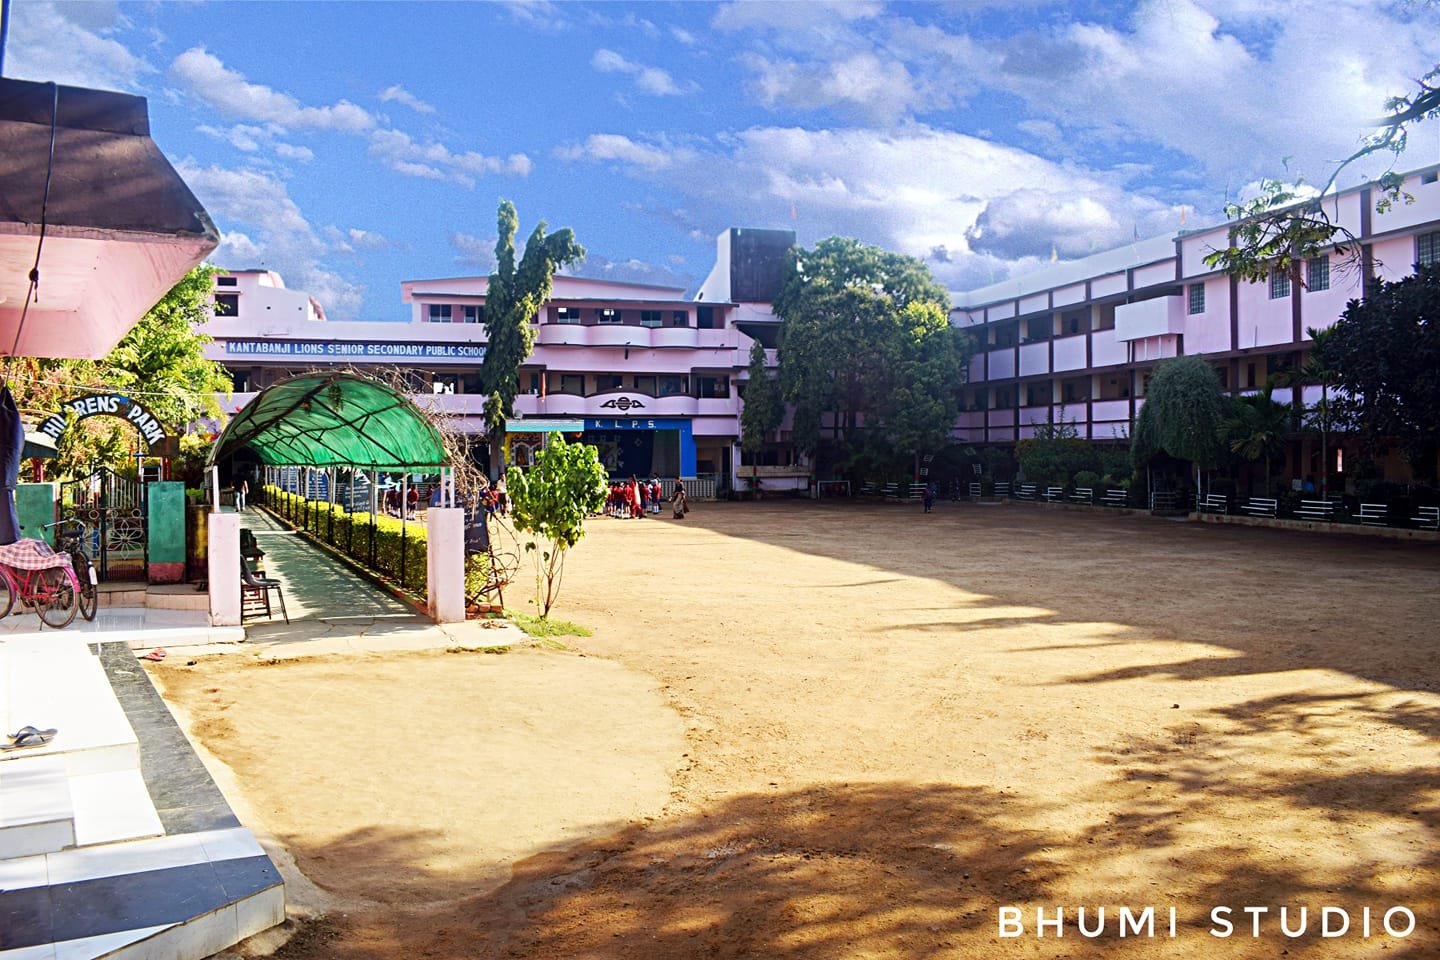 Kantabanji Lions Public School